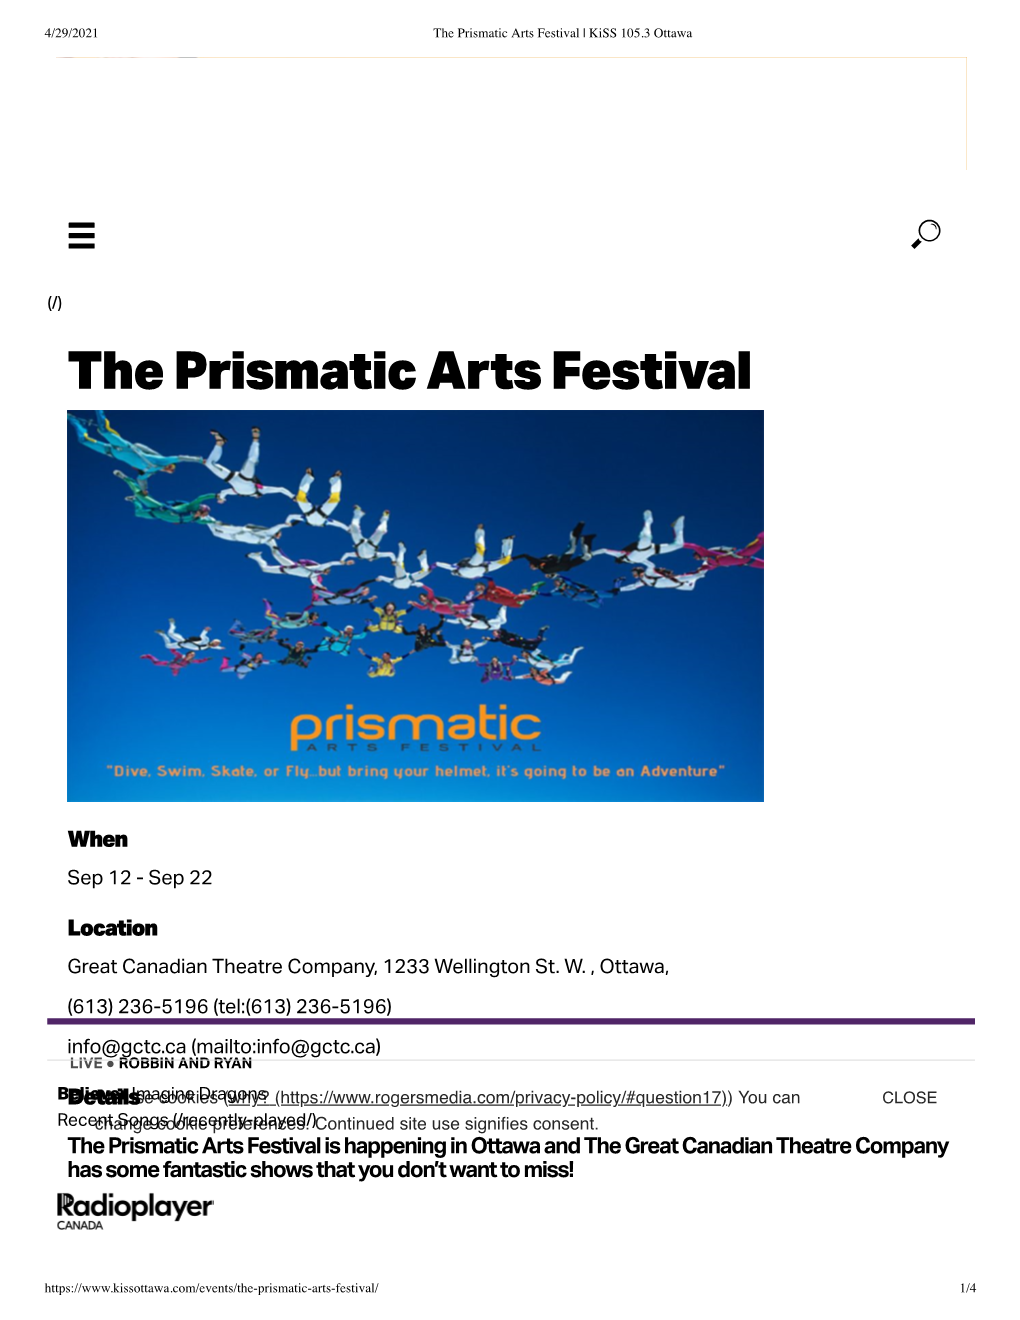 Prismatic Arts Festival 2019